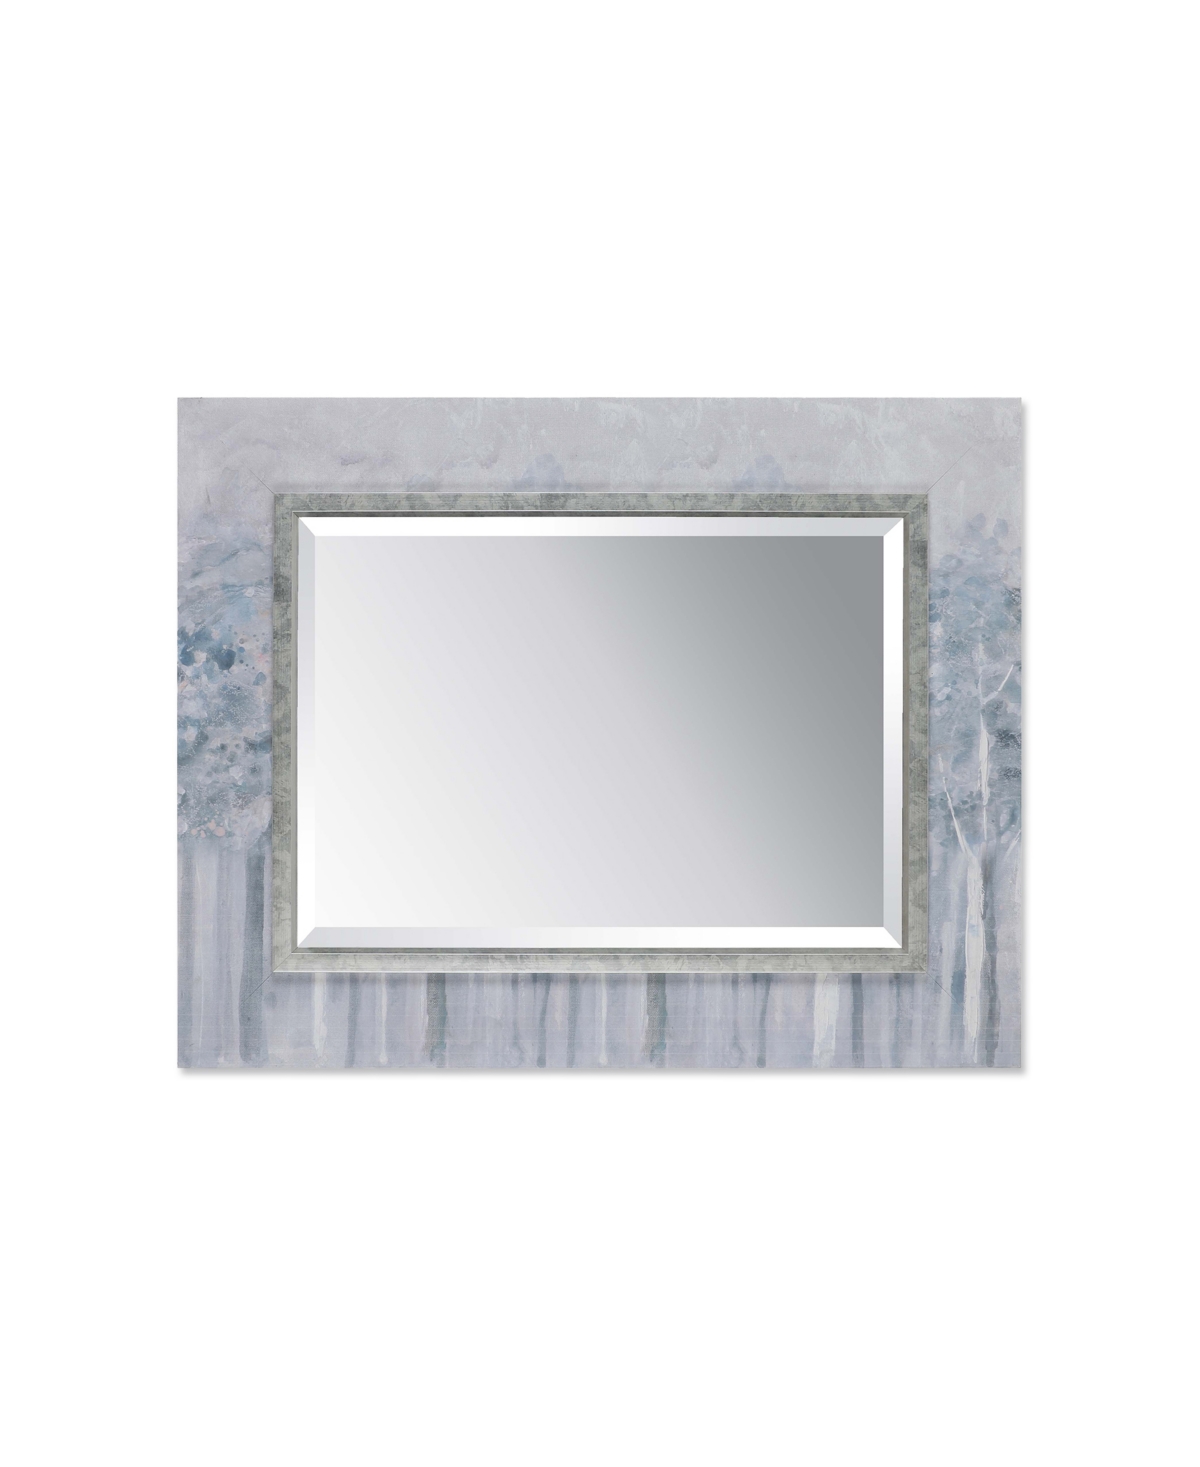 Decorative Rectangular Art Mirror, 31.25" x 39.25" - Blue, Silver